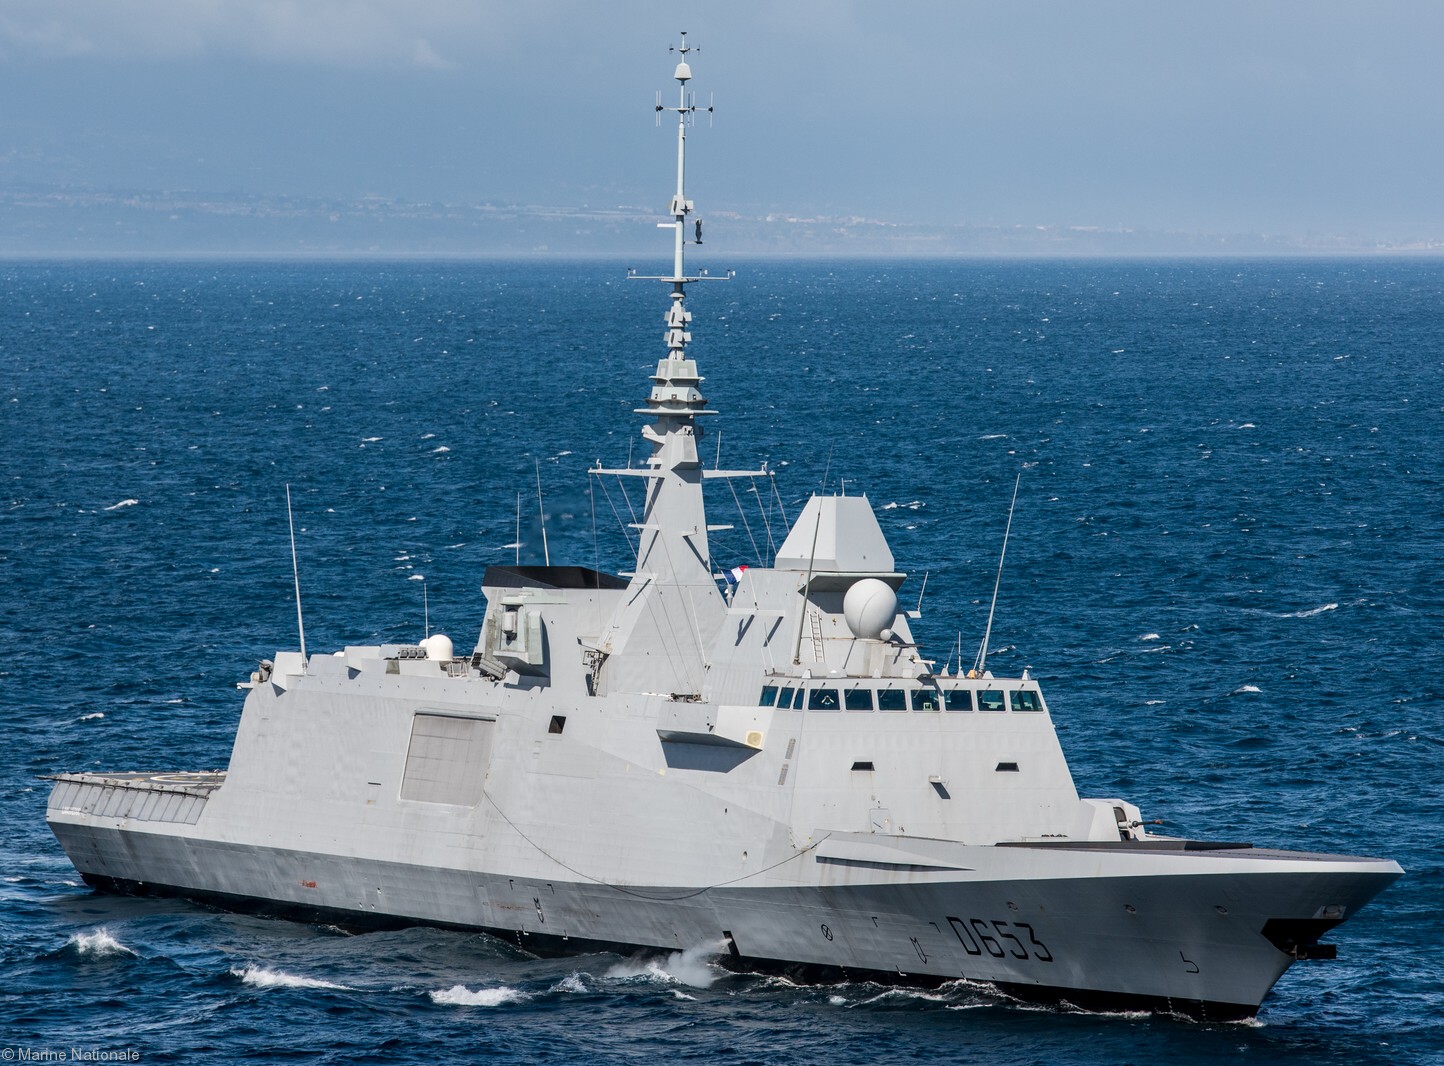 d-653 fs languedoc fremm aquitaine class frigate fregate multi purpose french navy marine nationale 14